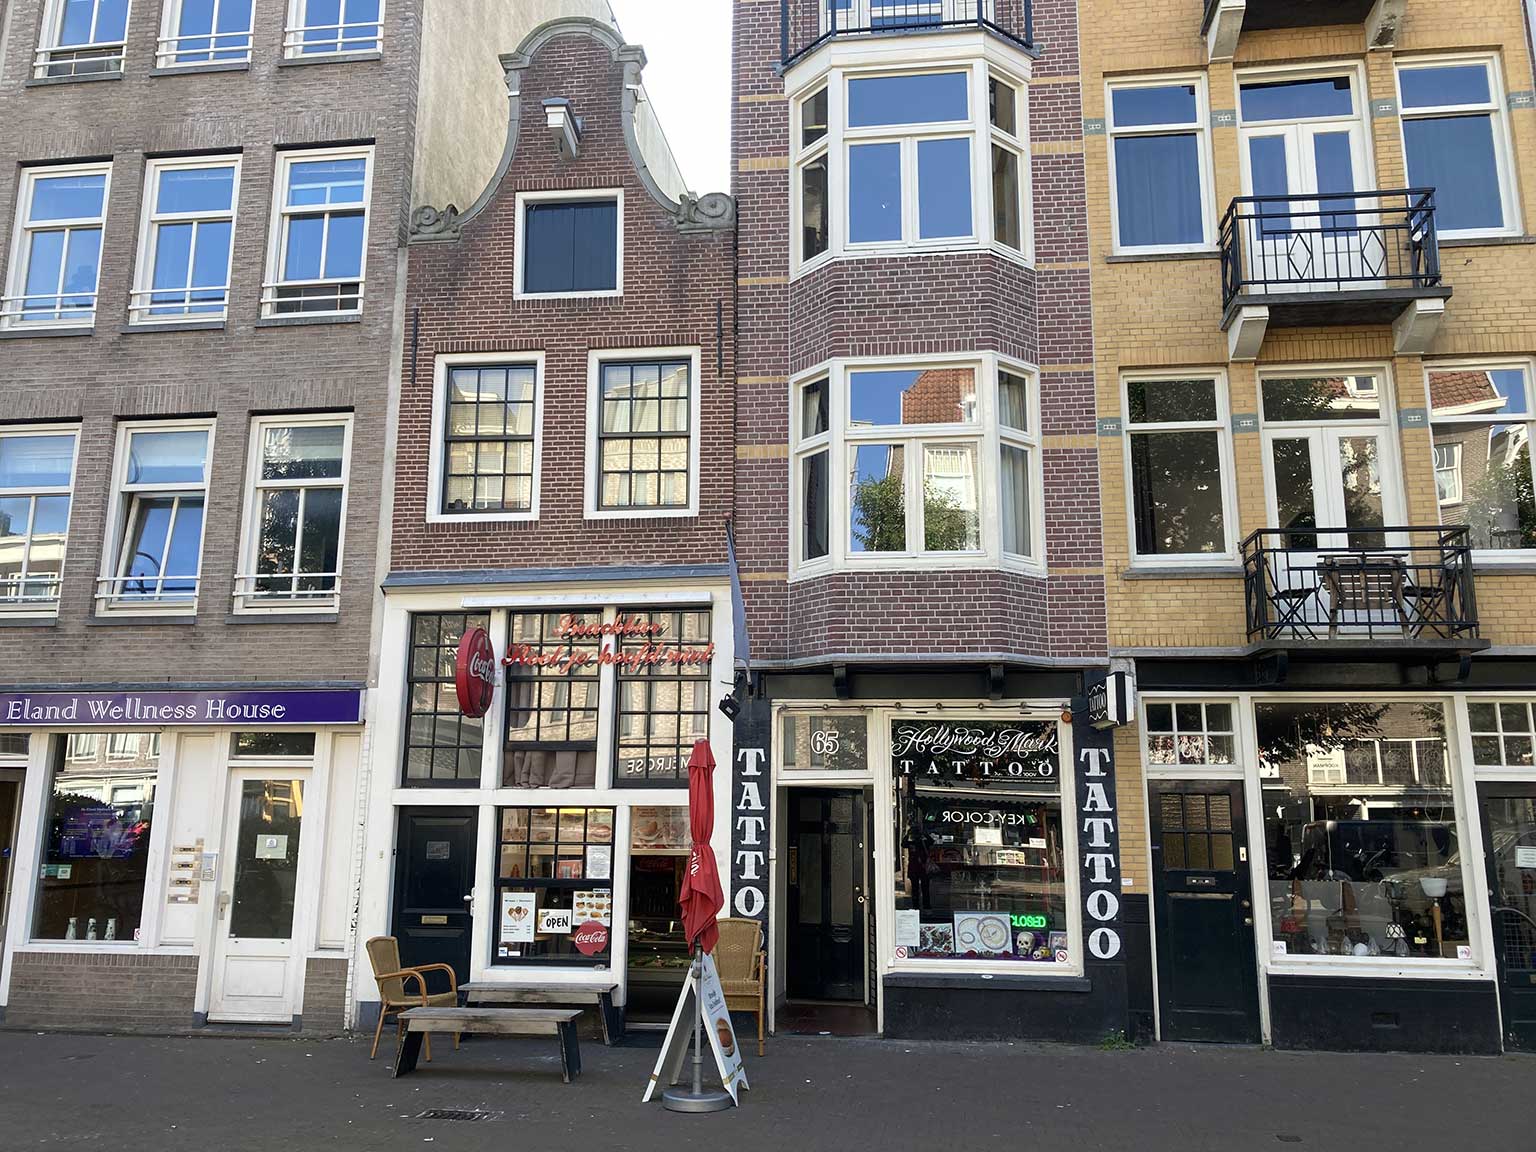 Elandsgracht 61-67, with Snackbar Stoot Je Hoofd Niet at number 63, Amsterdam